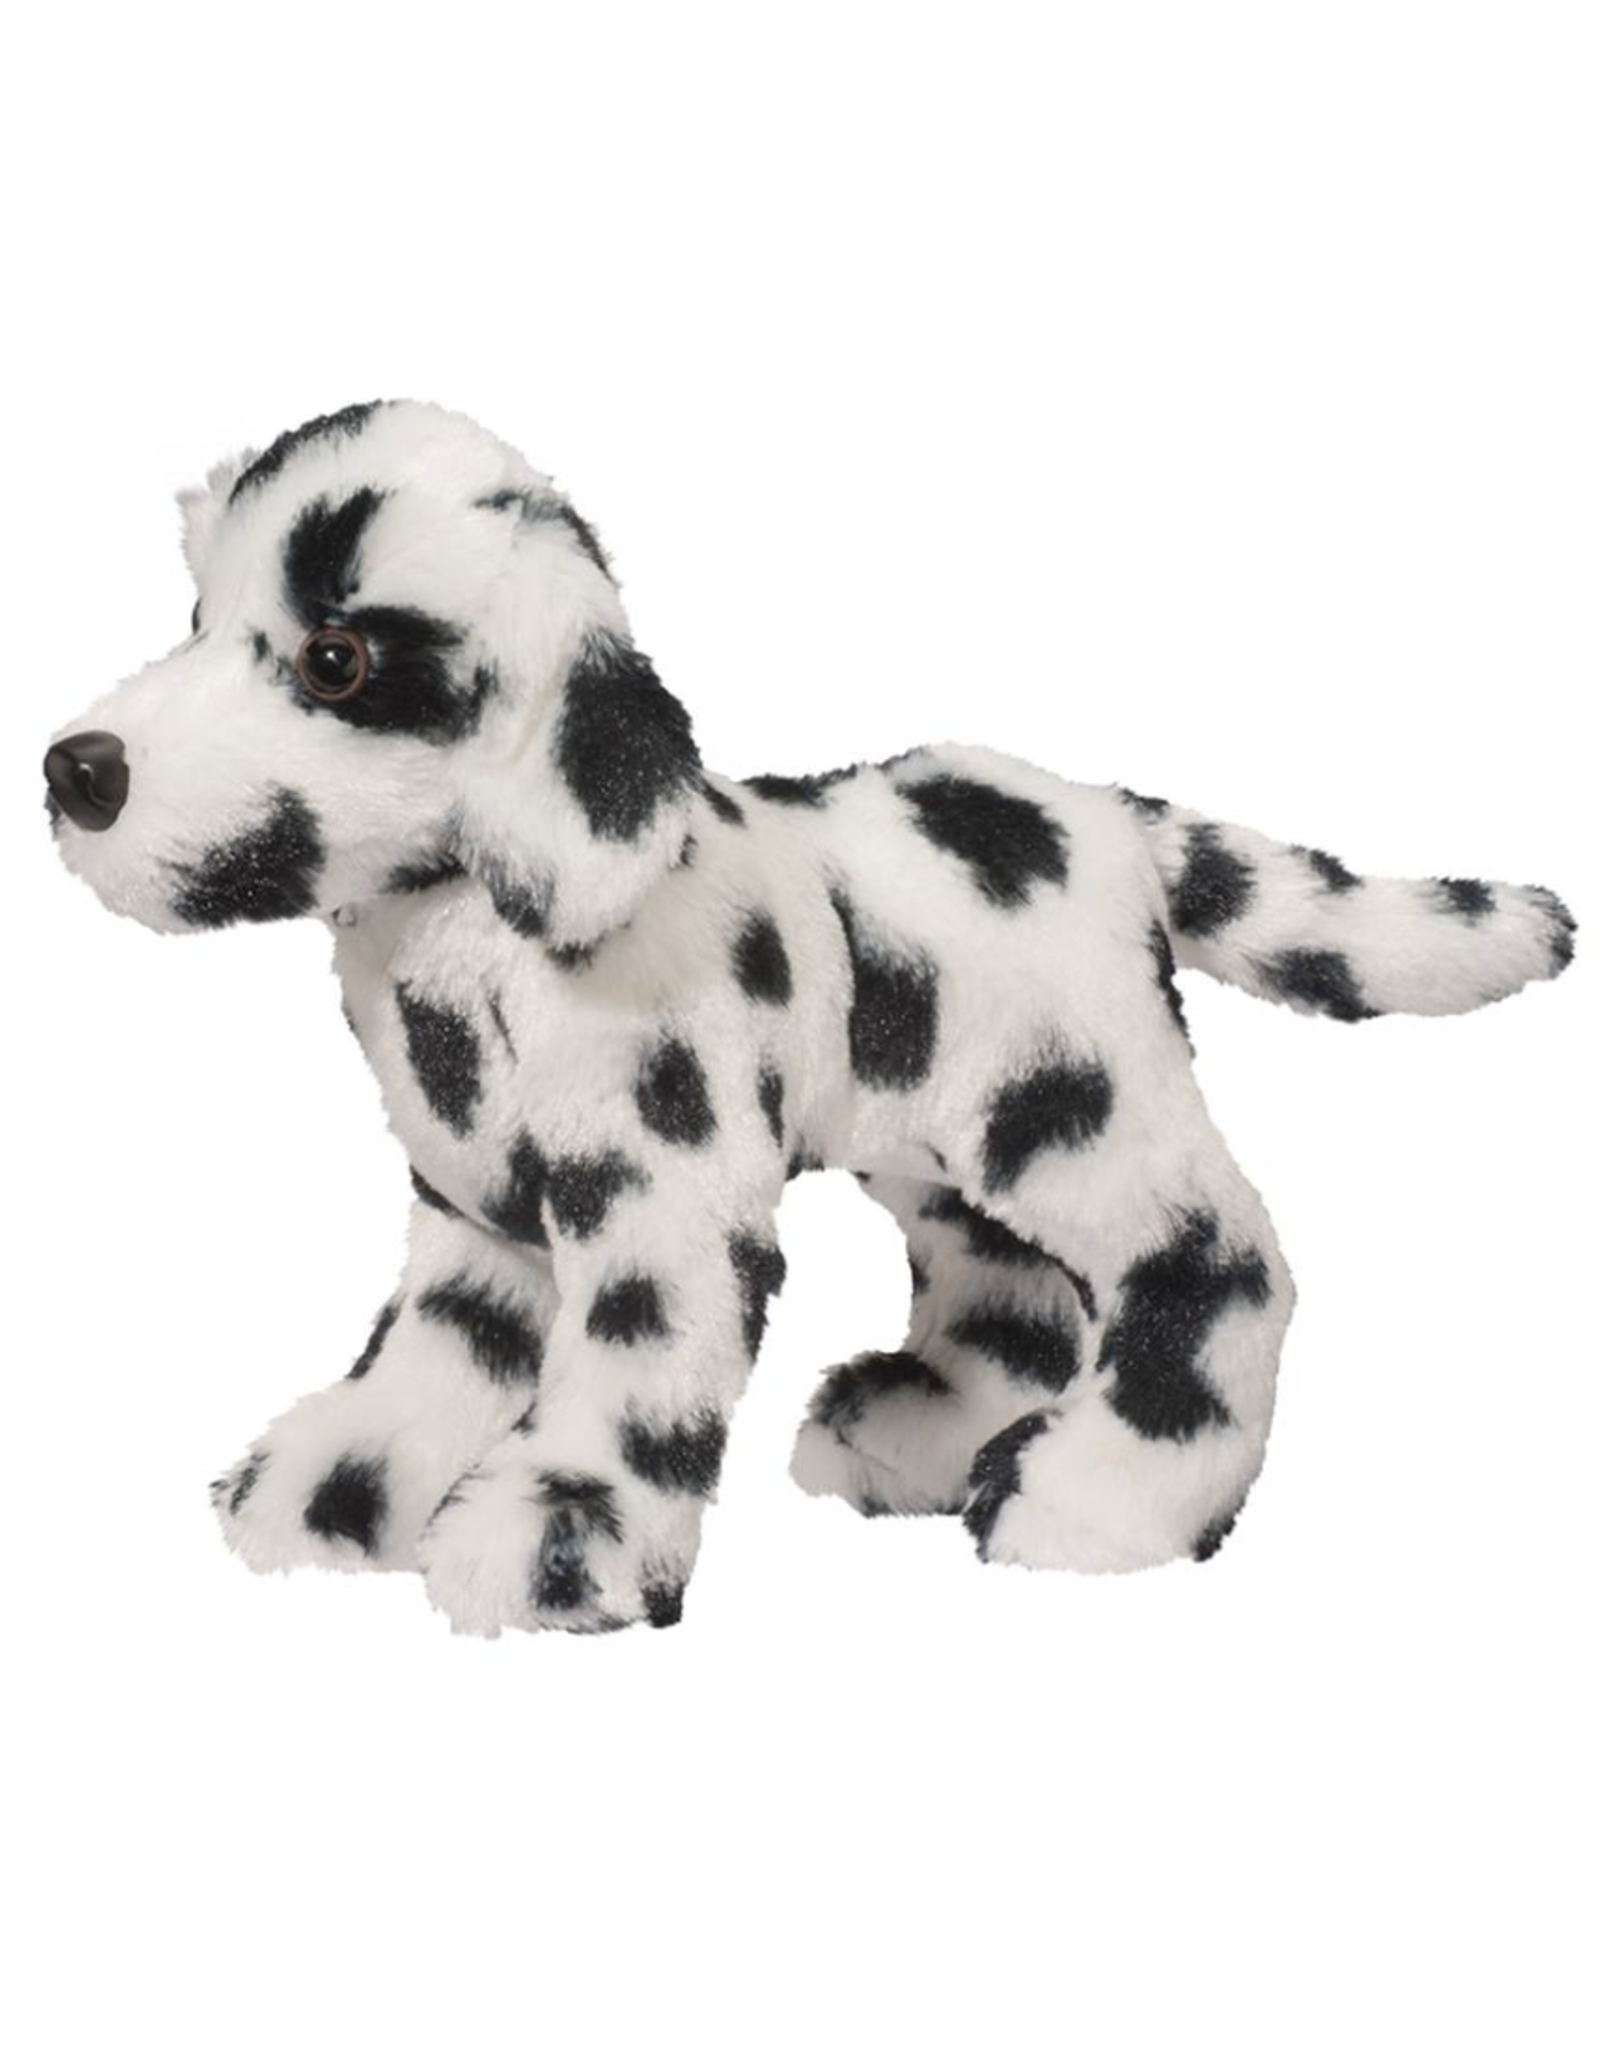 Douglas Dooley Dalmatian Stuffed Animal